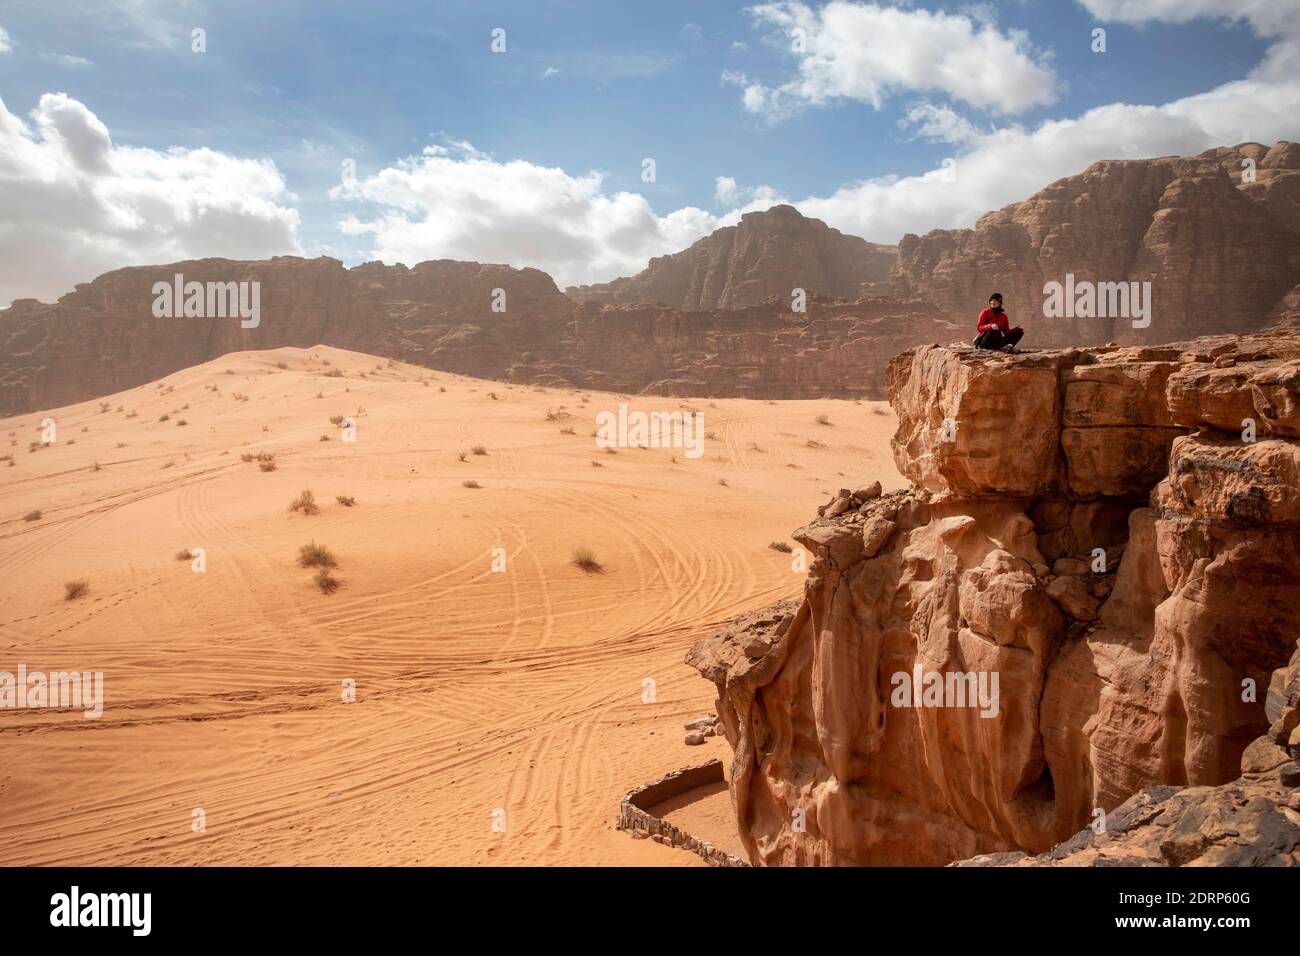 Turist in Wadi Rum Desert, Jordan, feb 2020, weeks before the global lockdown due to the pandemic Stock Photo - Alamy